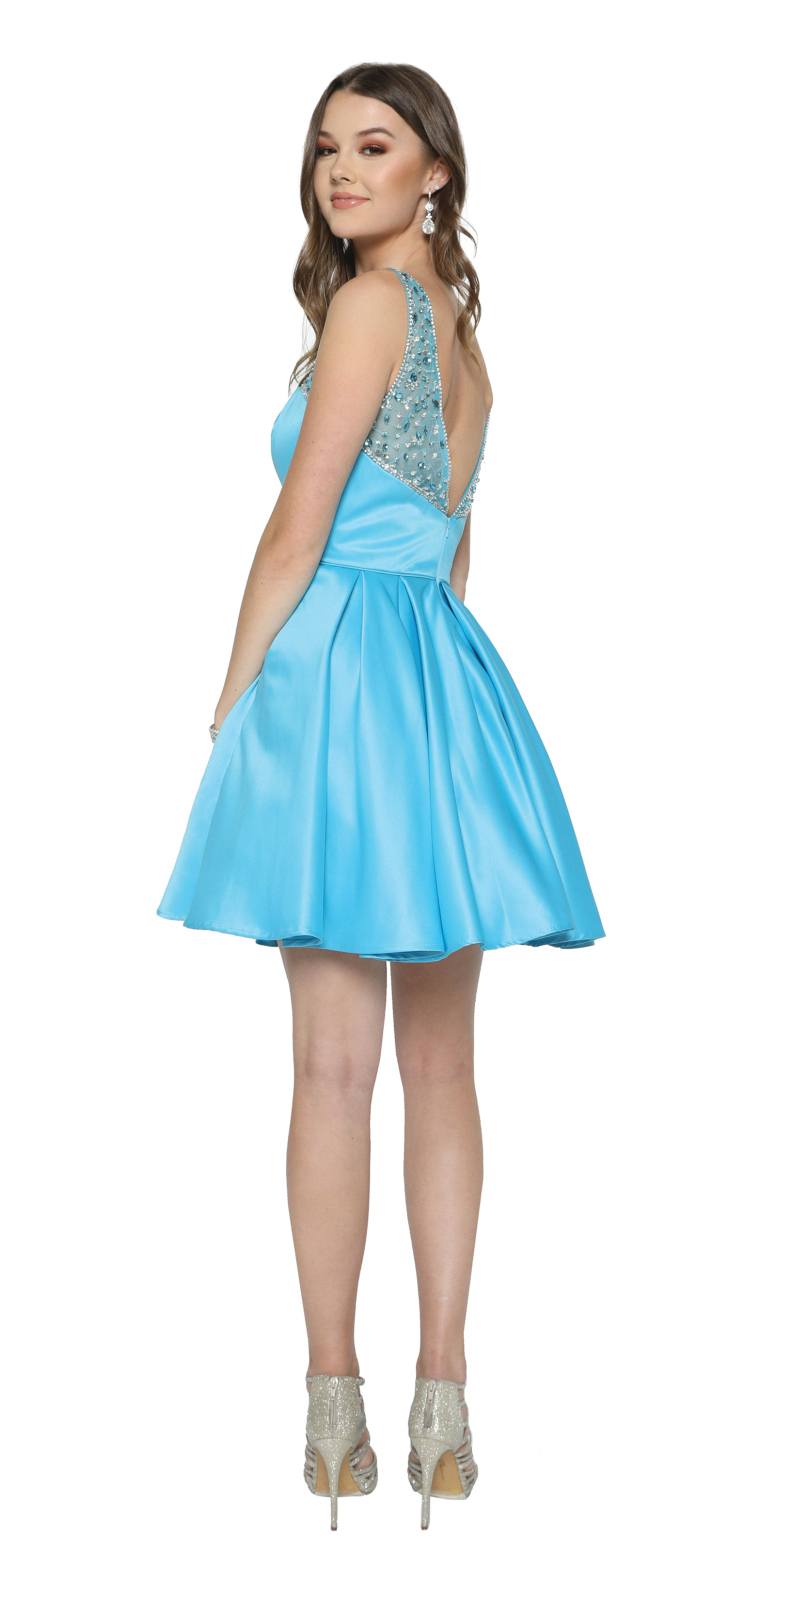 Sleeveless Short Prom Dress Beaded Illusion Neckline Turquoise